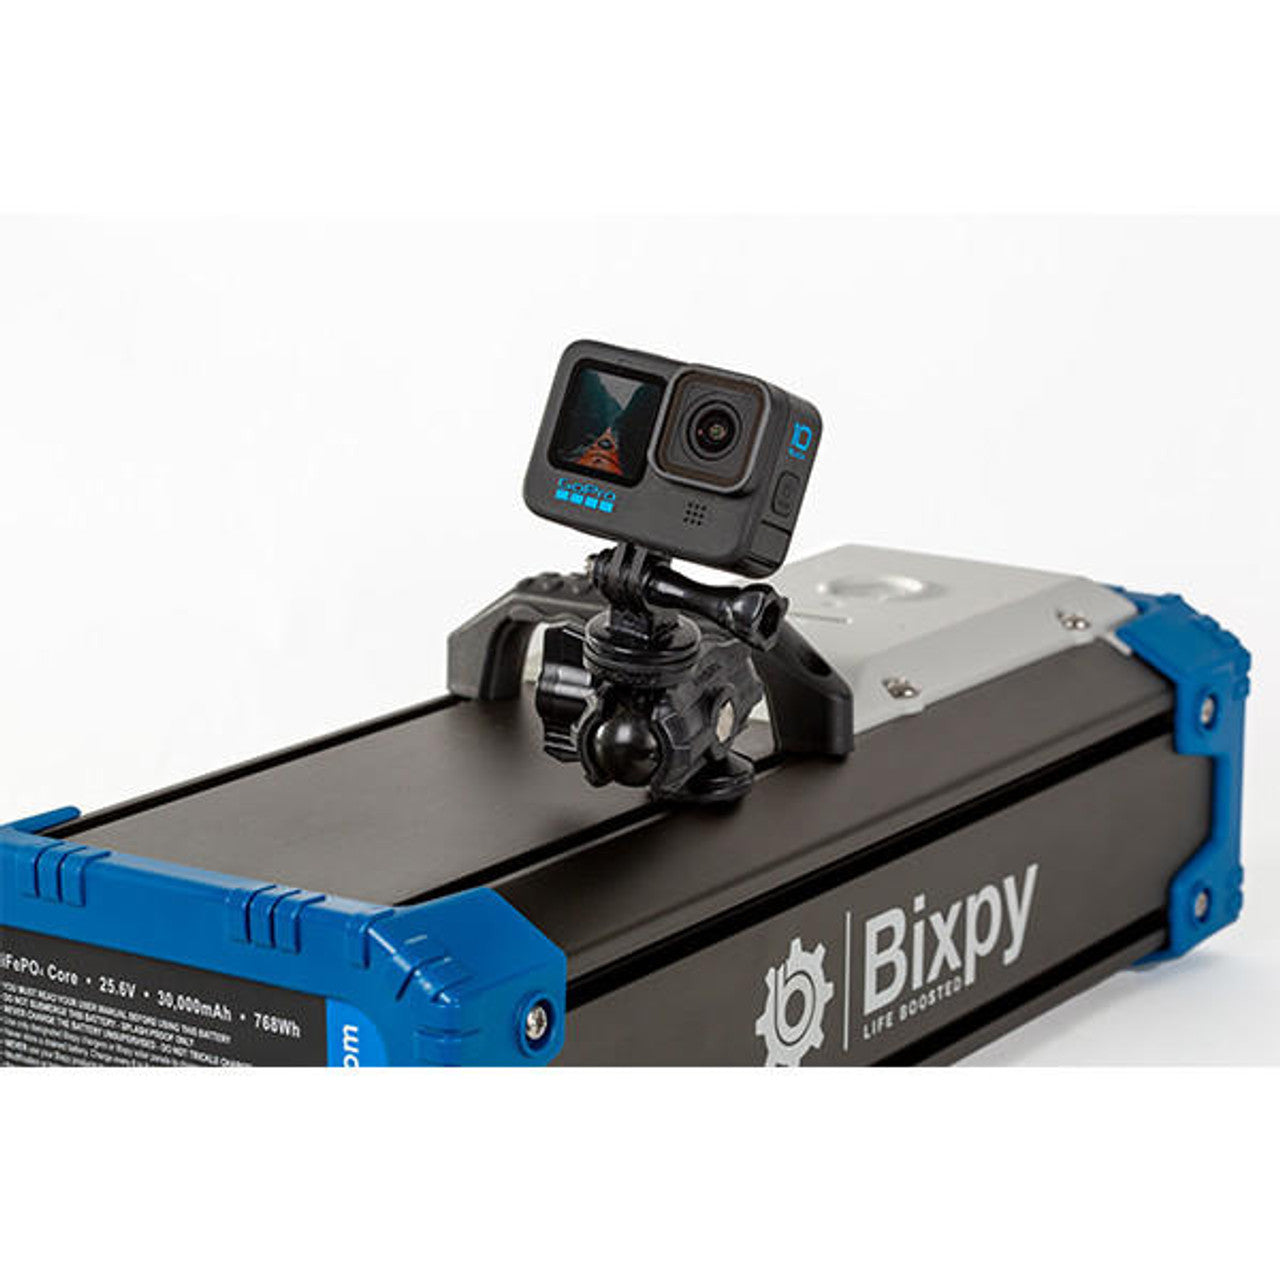 Bixpy Portable Power Bank PP-77-AP - 12V Smart Charger